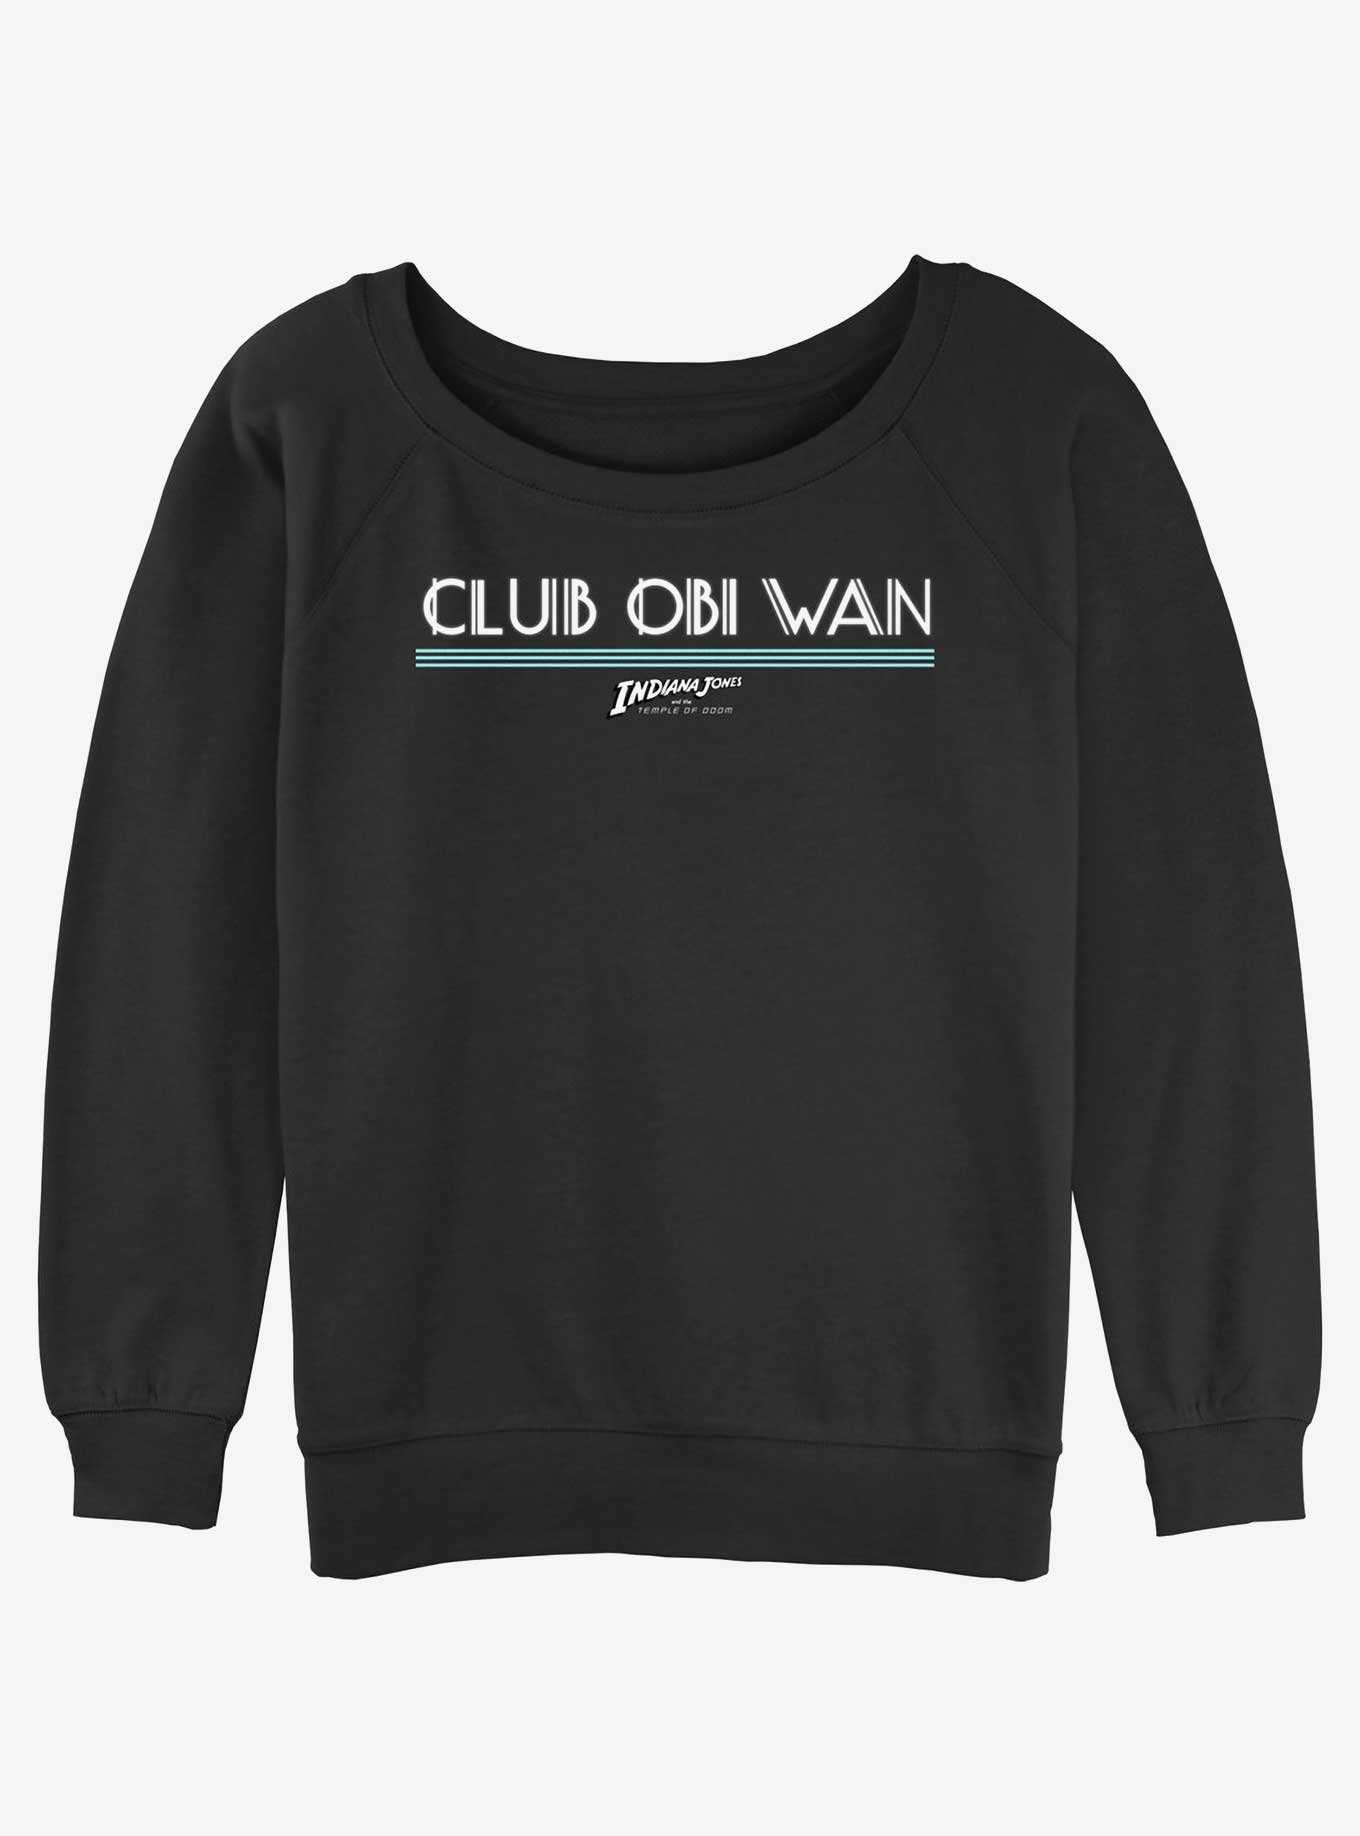 Indiana Jones Club Obi Wan Girls Slouchy Sweatshirt, , hi-res